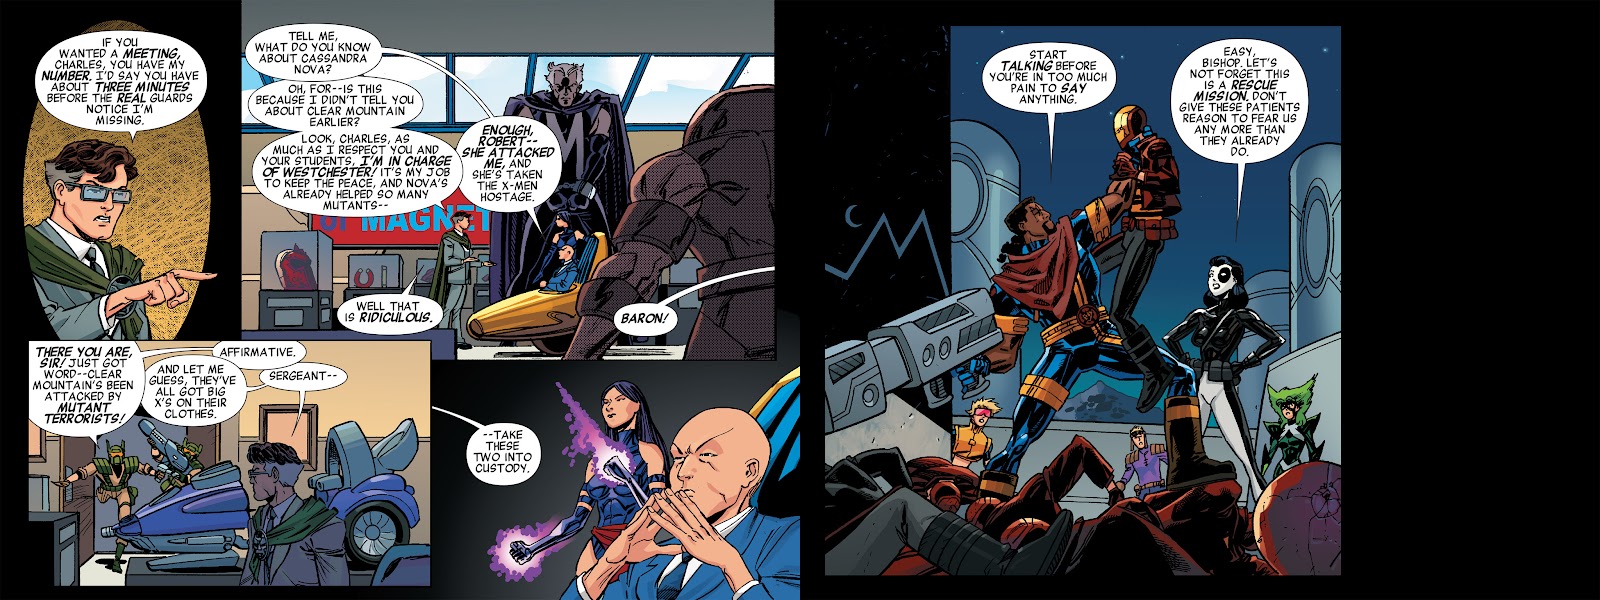 X-Men '92 (Infinite Comics) issue 6 - Page 16